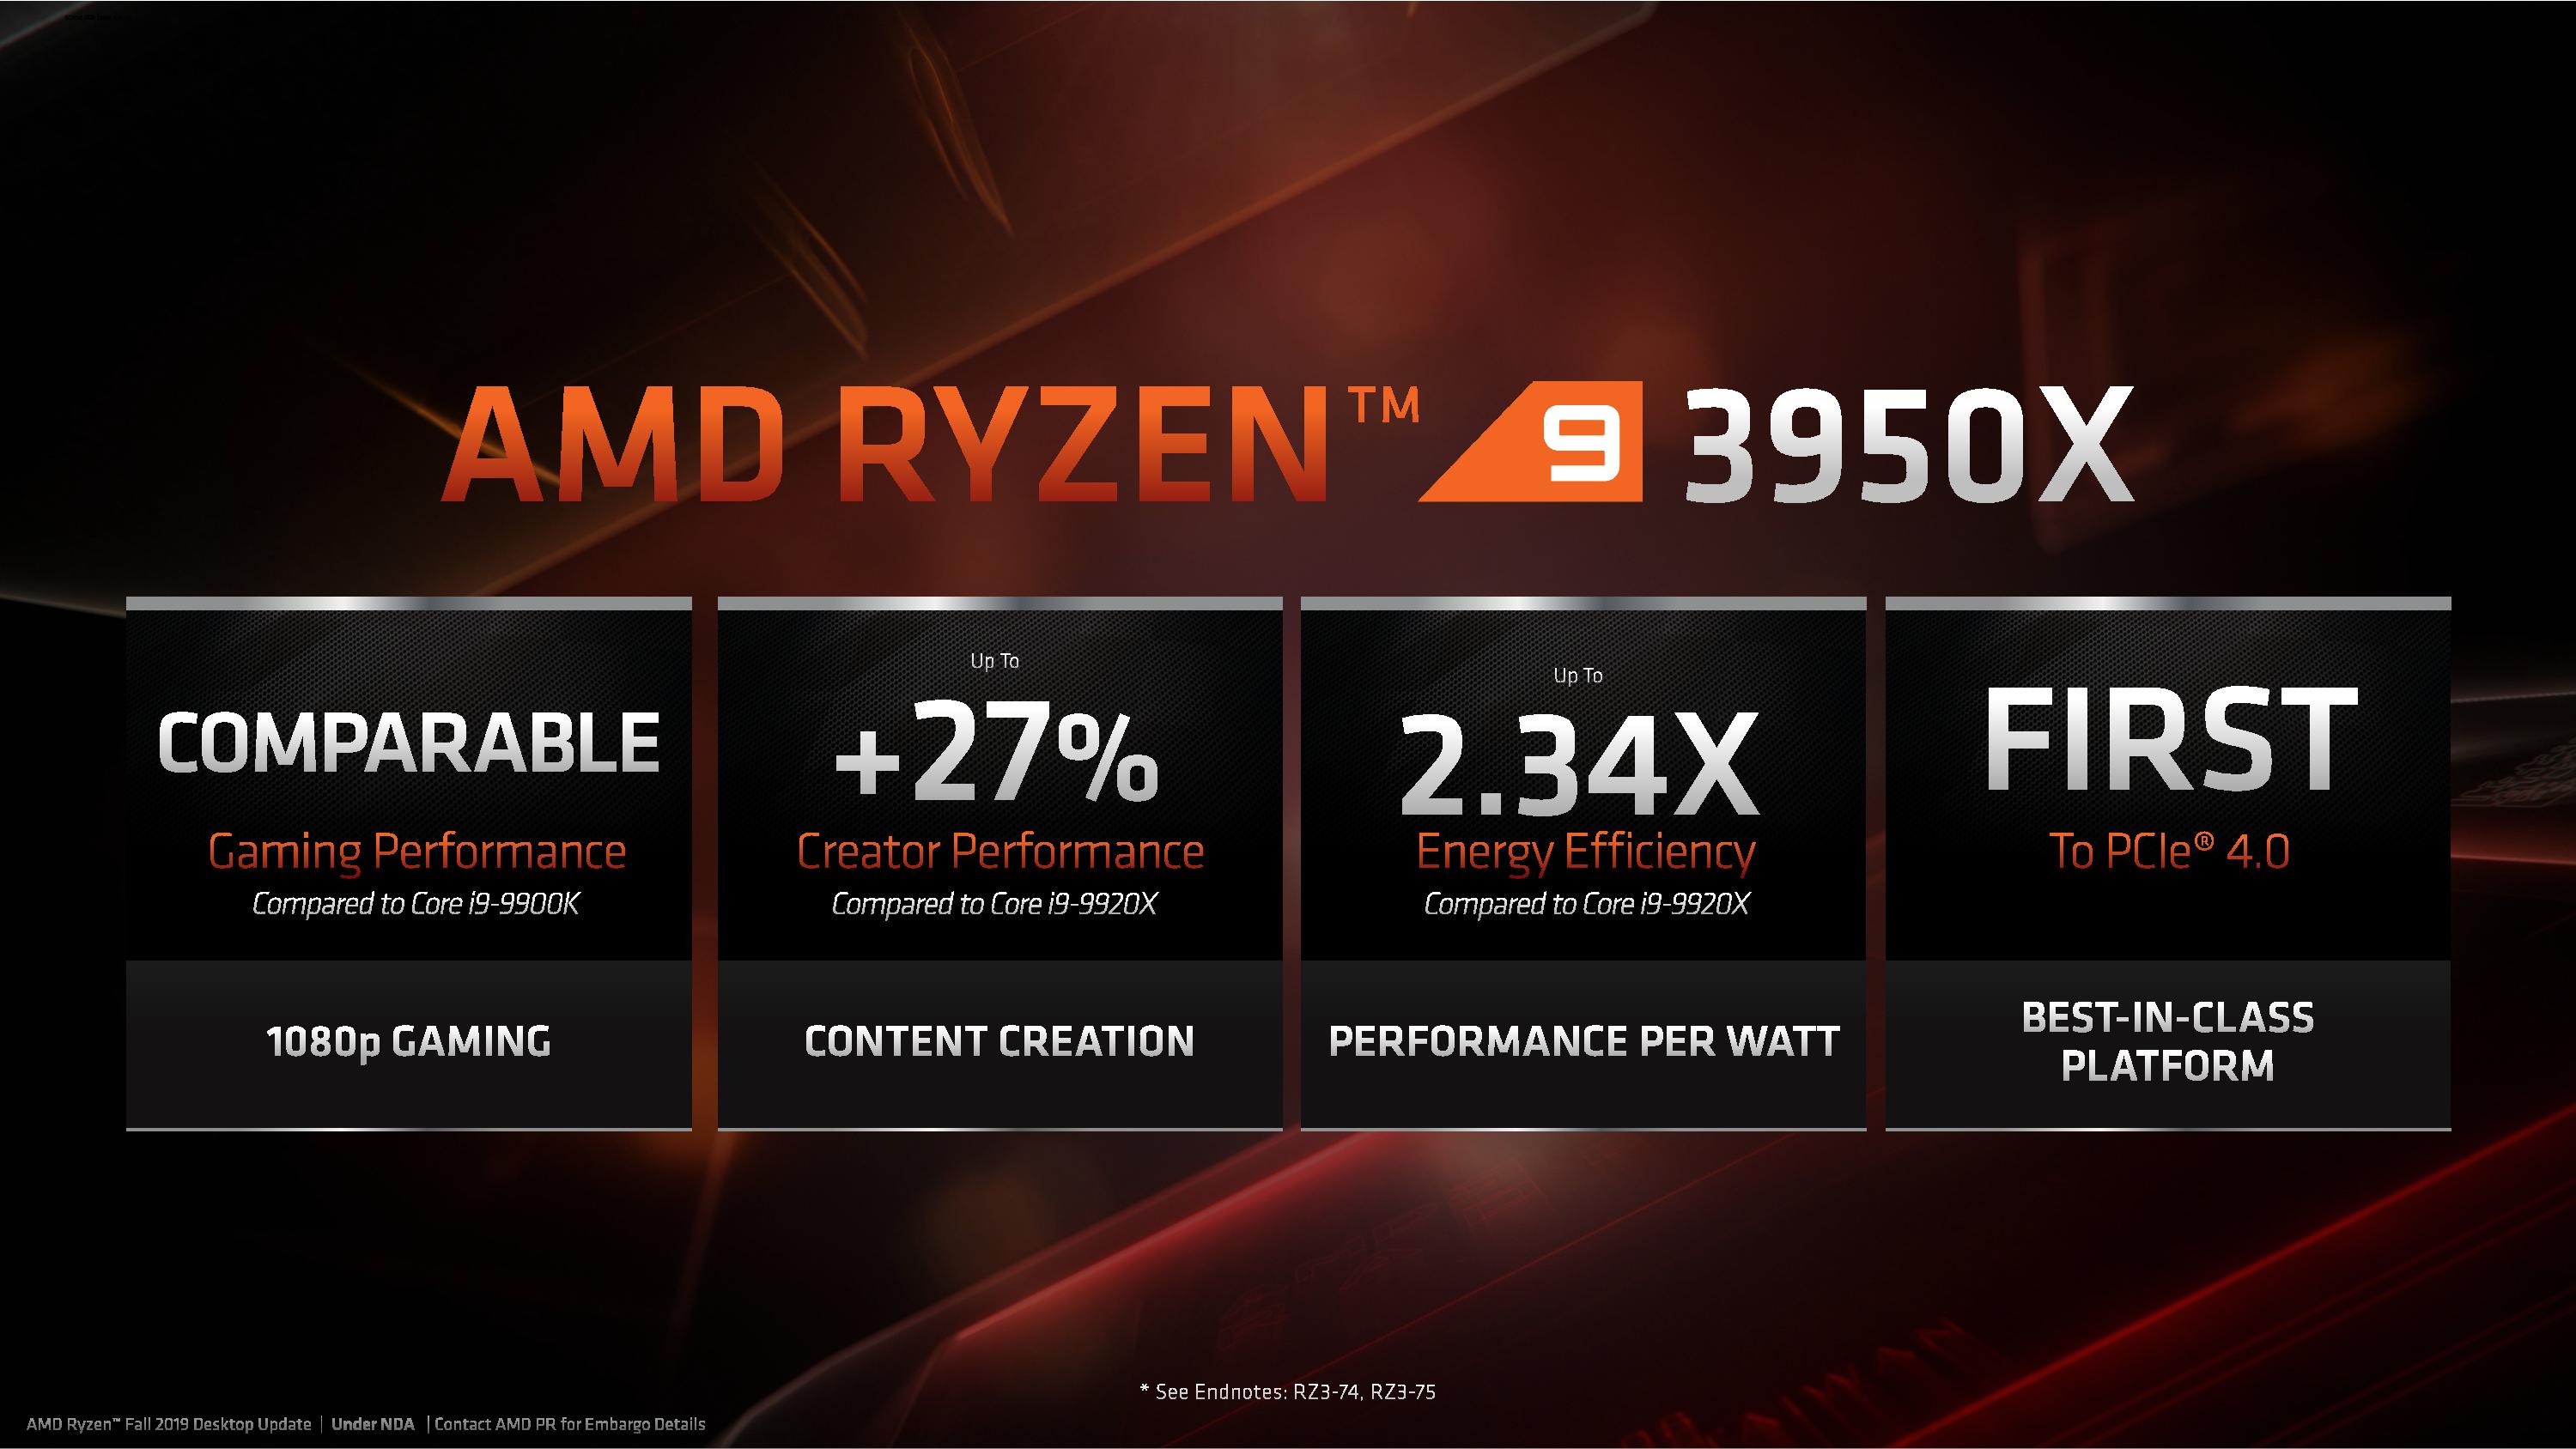 AMD Ryzen™ 9 3950X